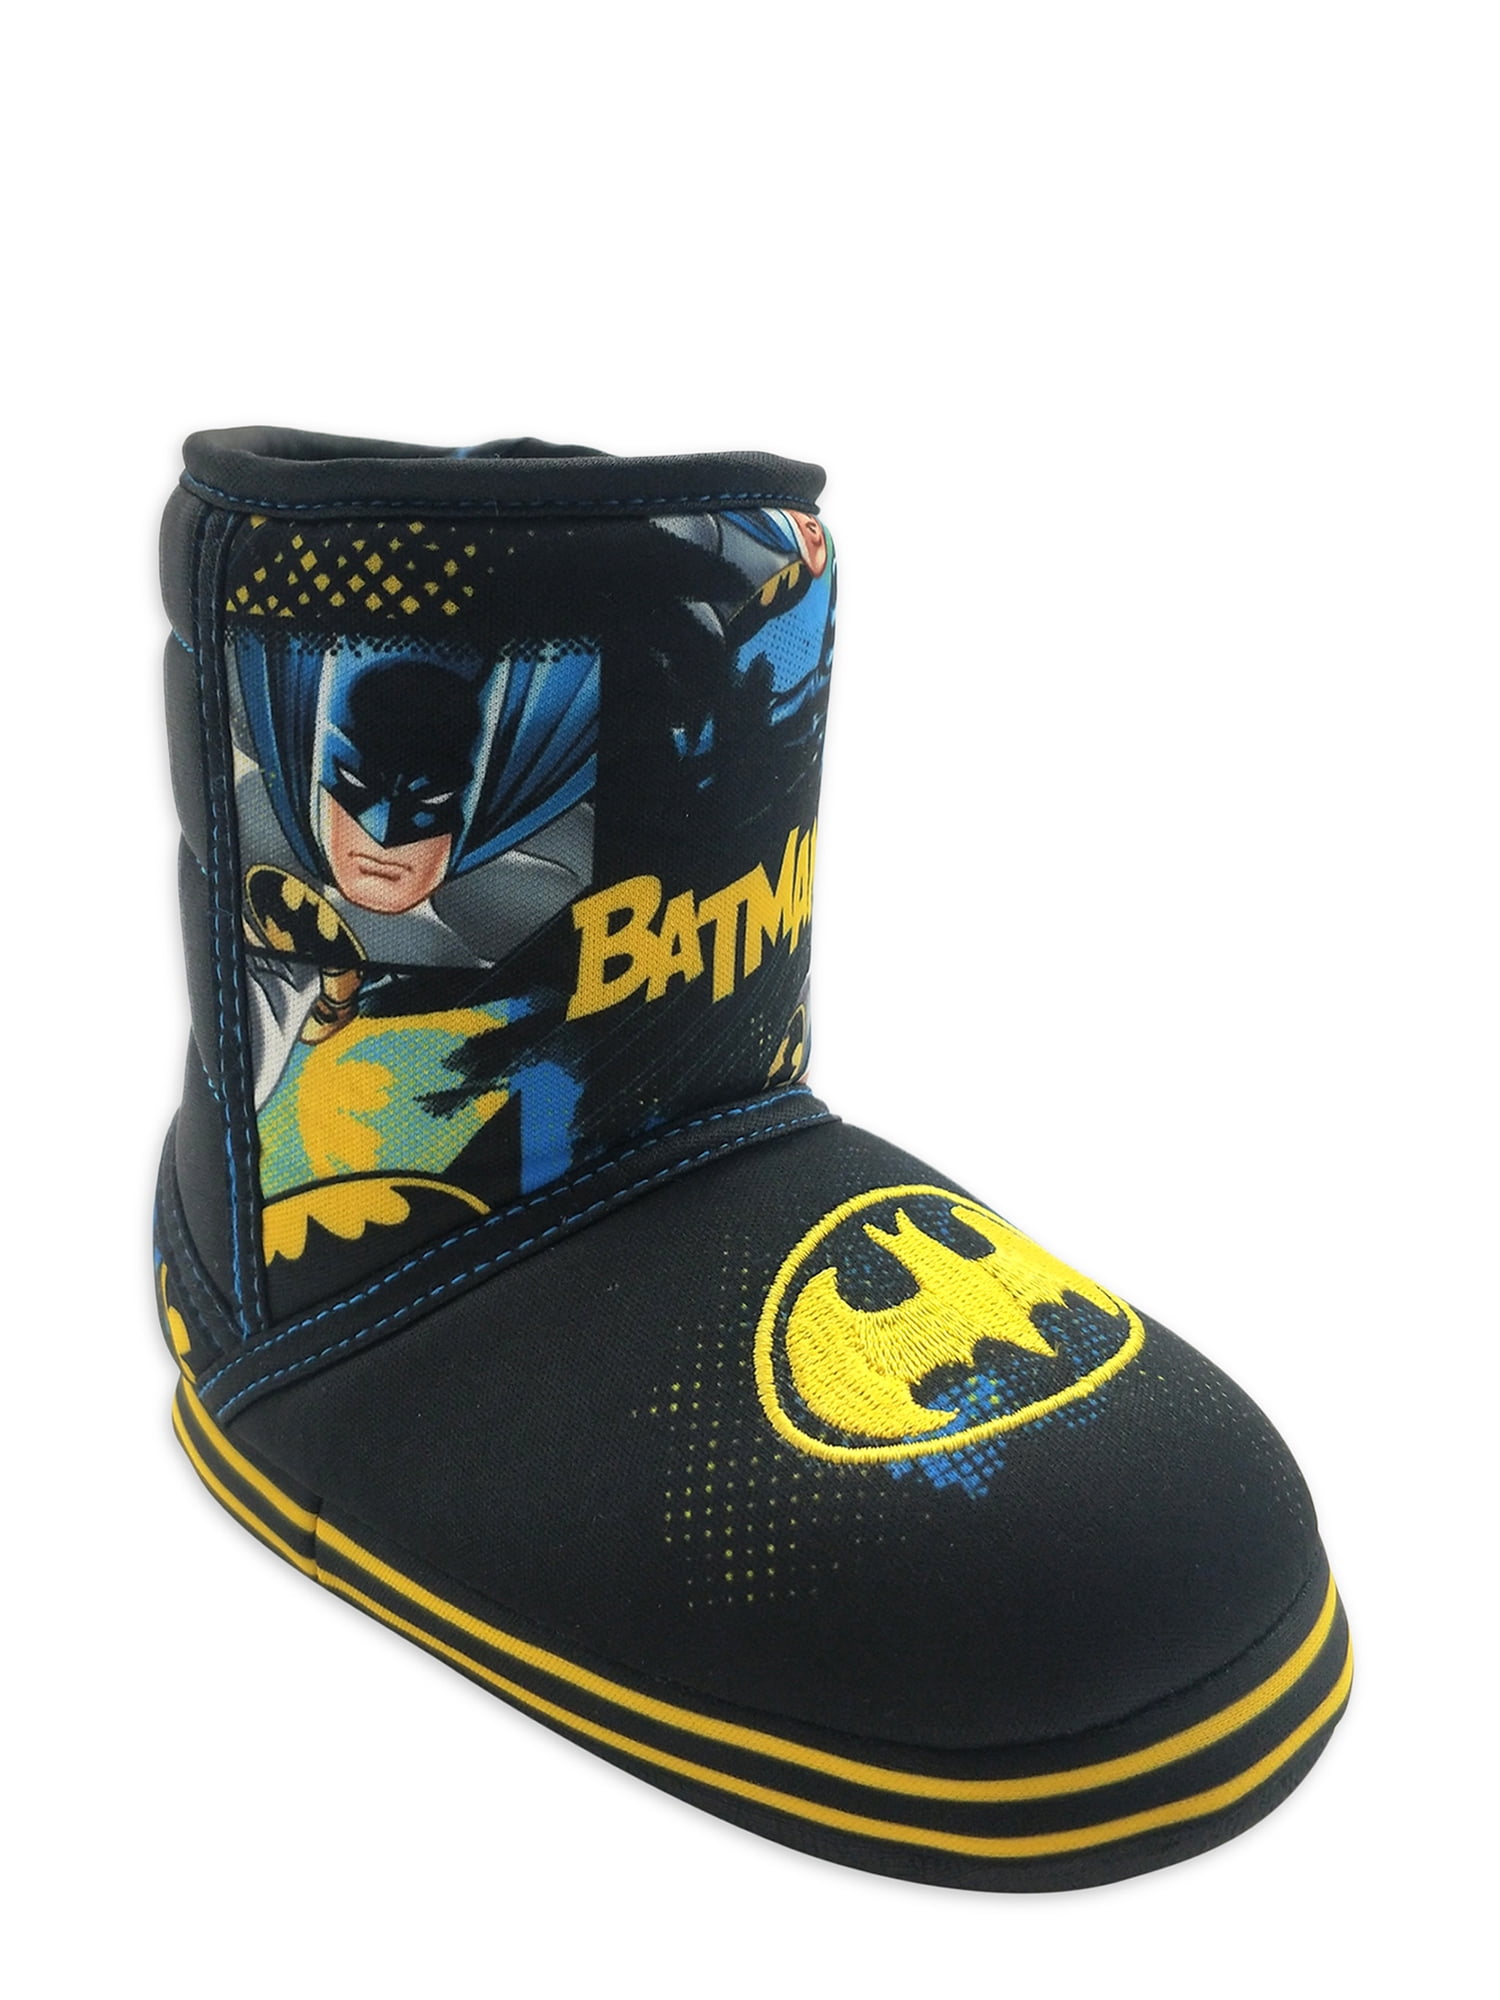 Boys Batman Slipper Kids Novelty Boots Fleece Slip On DC Comics Winter Warm Shoe 